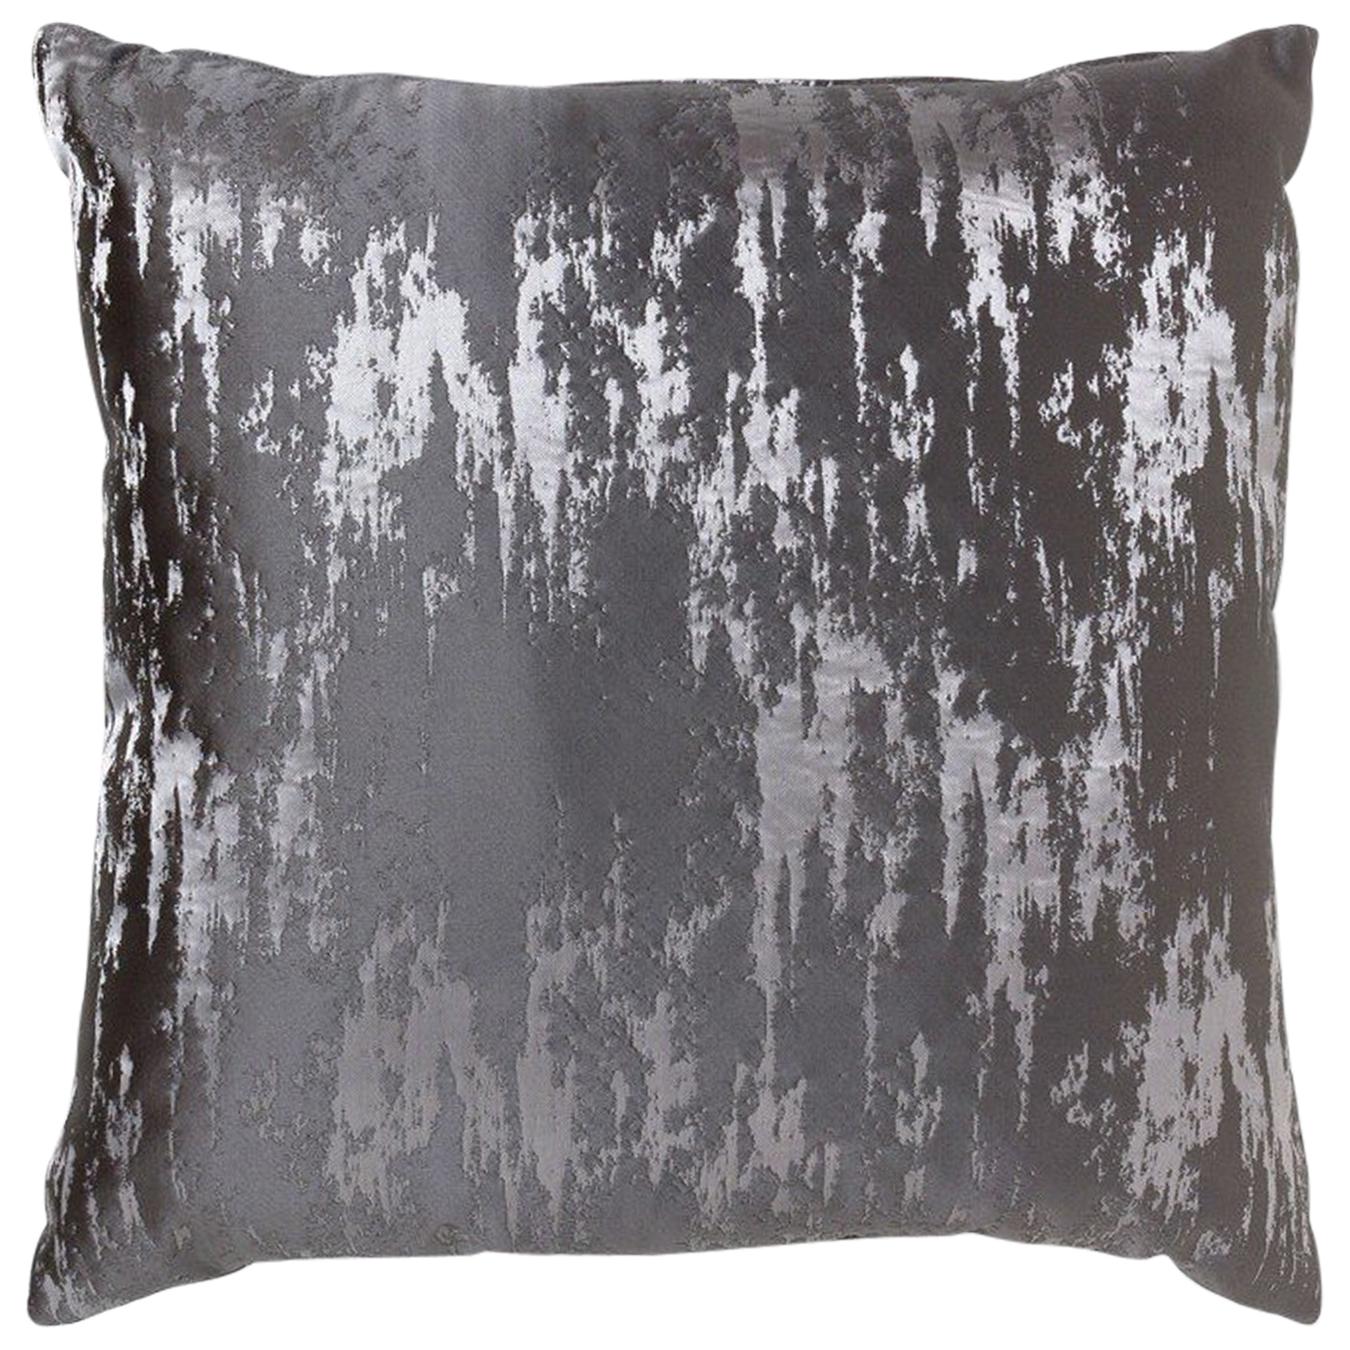 2 Brabbu Vortex Pillow in Gray and Silver Satin For Sale